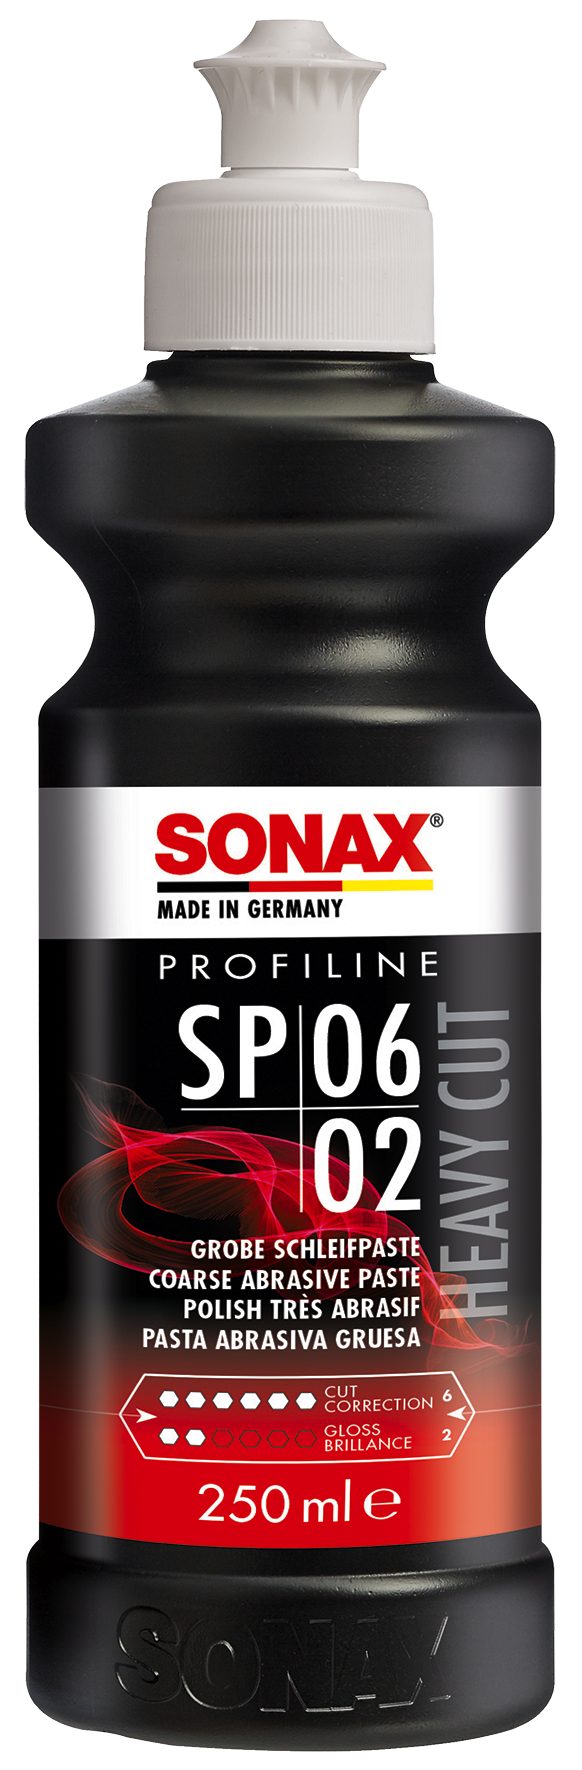 Sonax SONAX PROFILINE SP 06-02 1 L Auto-Reinigungsmittel